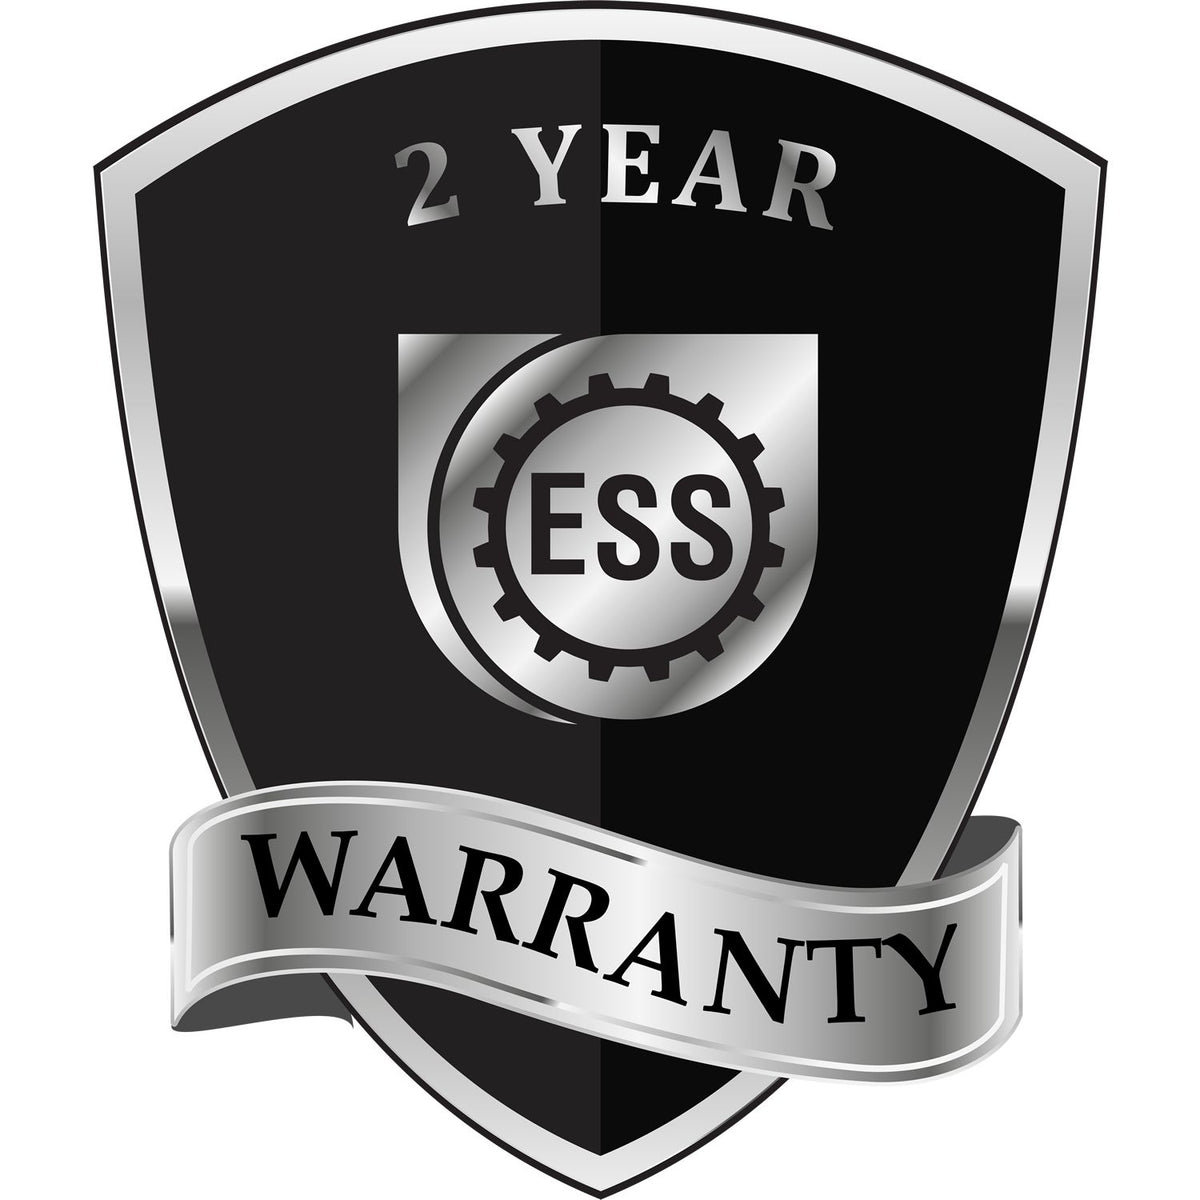 A black and silver badge or emblem showing warranty information for the Gift Maryland Land Surveyor Seal